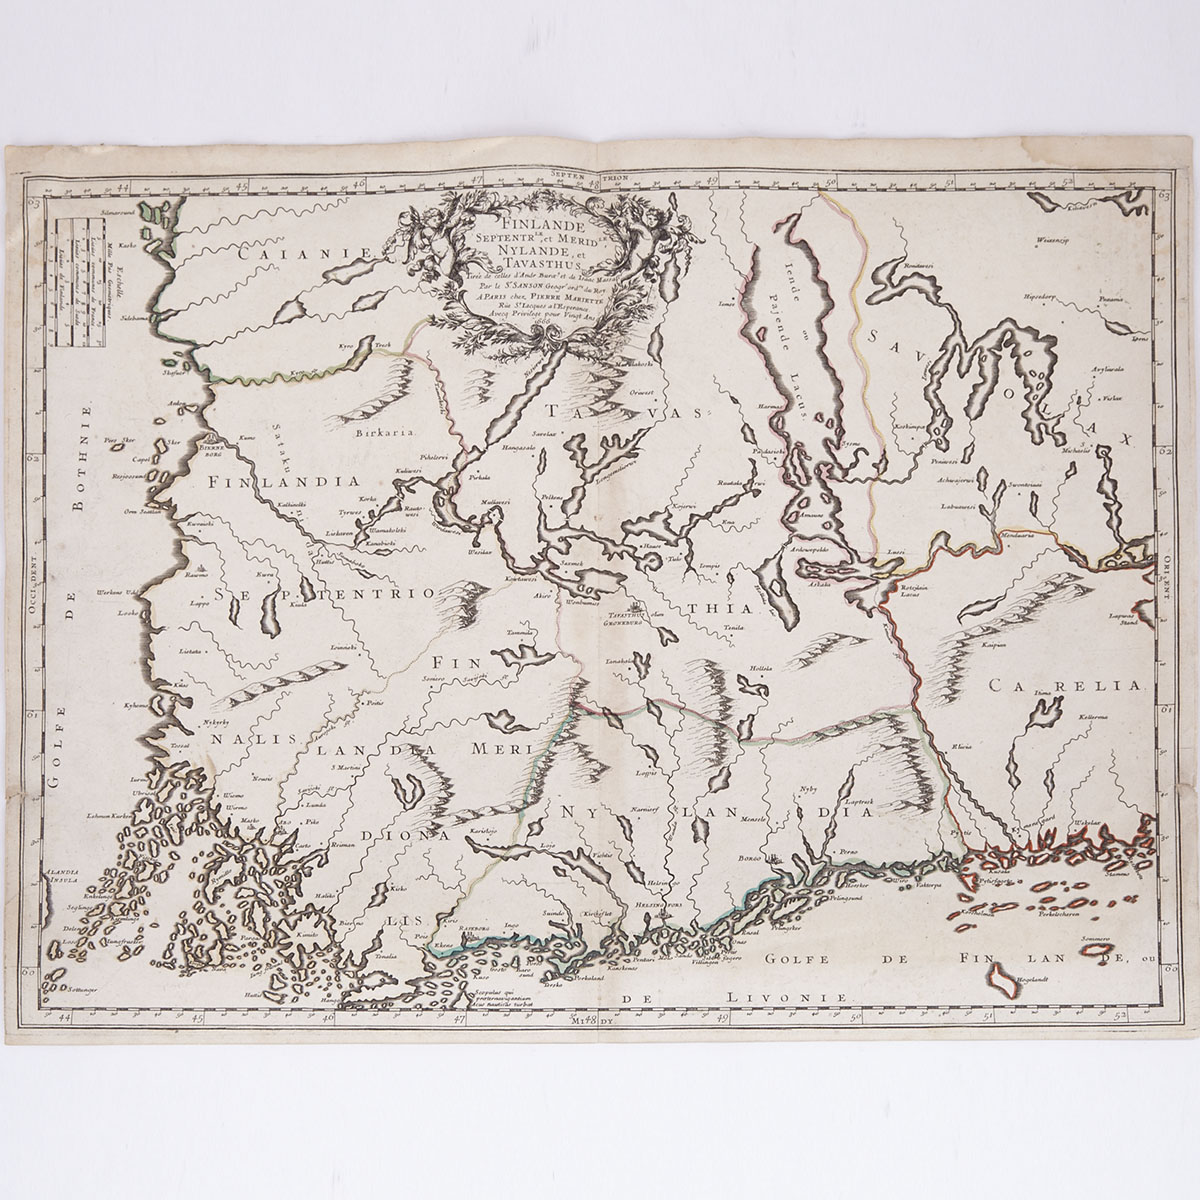 Three Maps of Scandinavia by Nicholas Sanson d’Abbeville (1600-1667), 1666